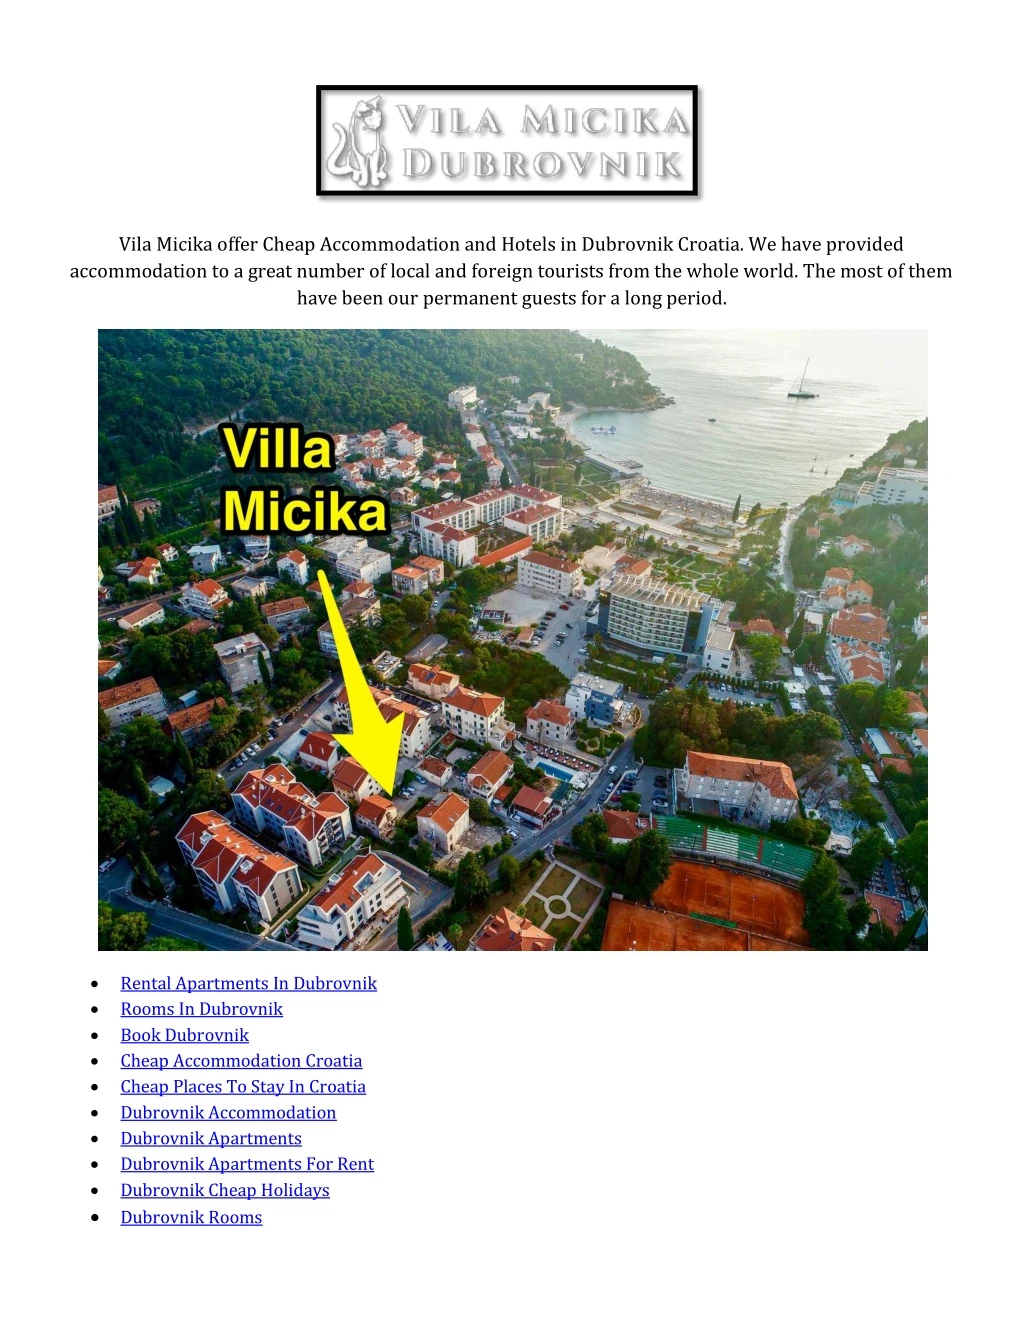 vila micika offer cheap accommodation and hotels